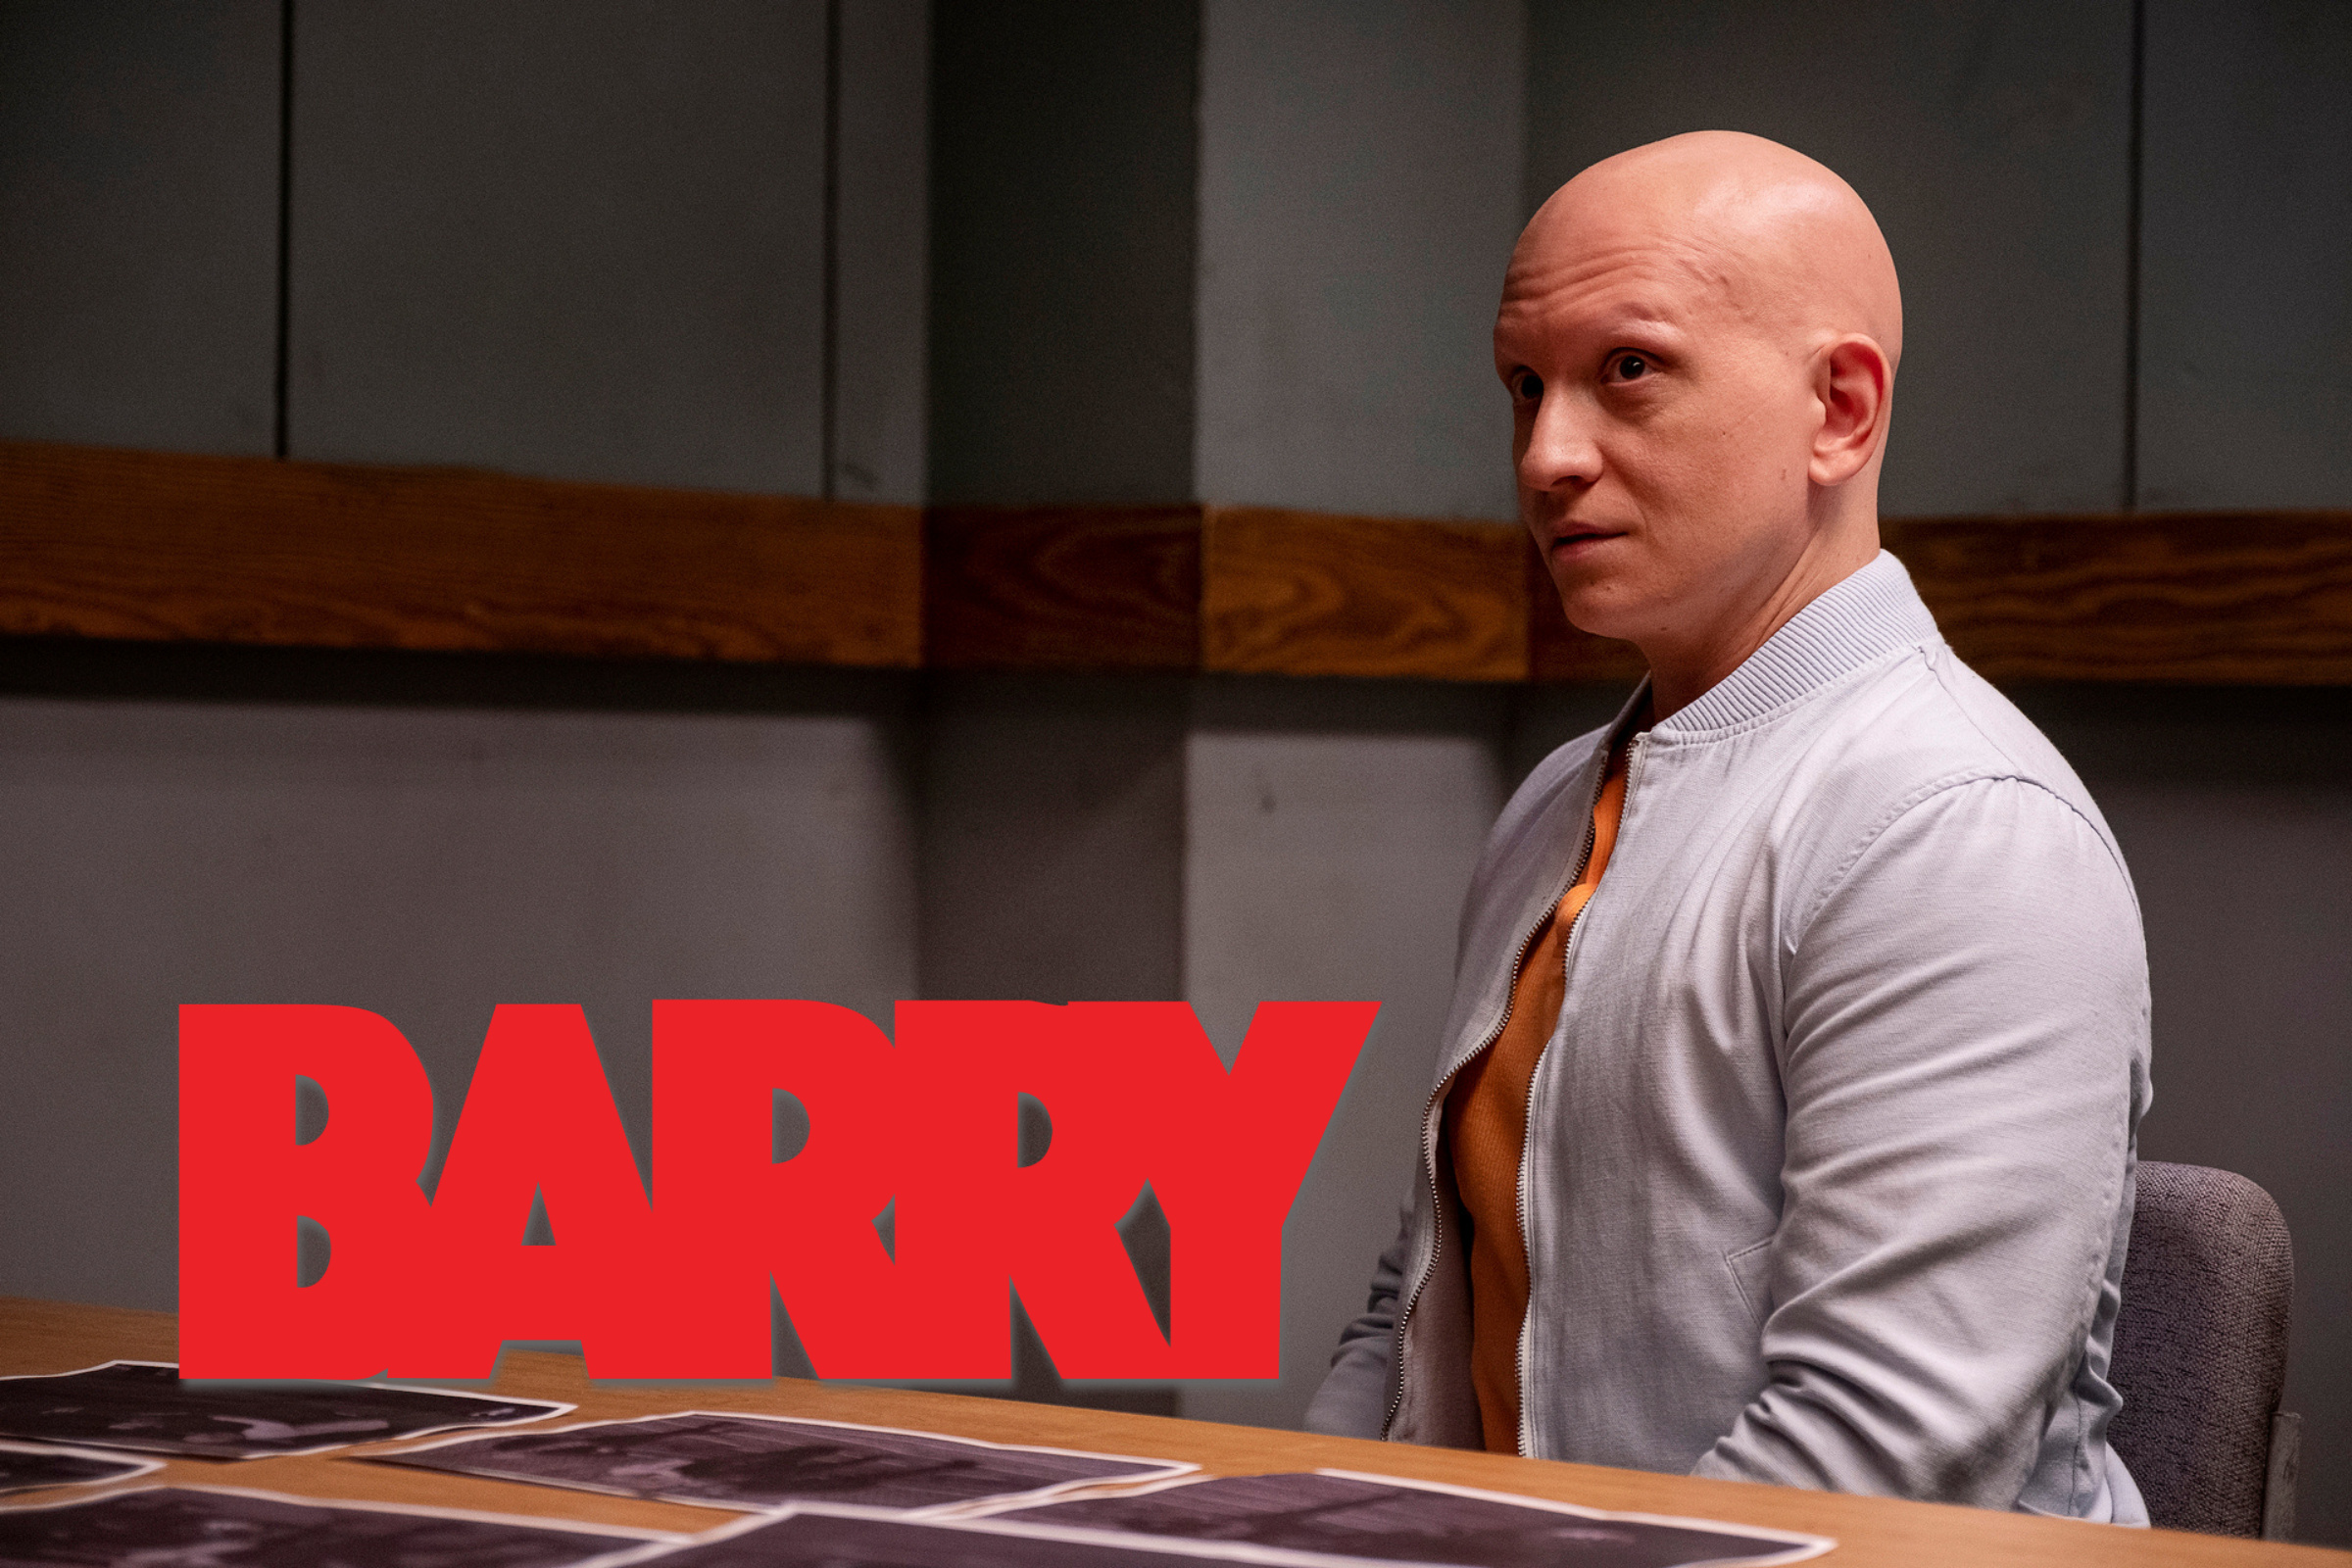 Barry TV series, Noho Hank's LGBT reveal, Anthony Carrigan interview, 2400x1600 HD Desktop